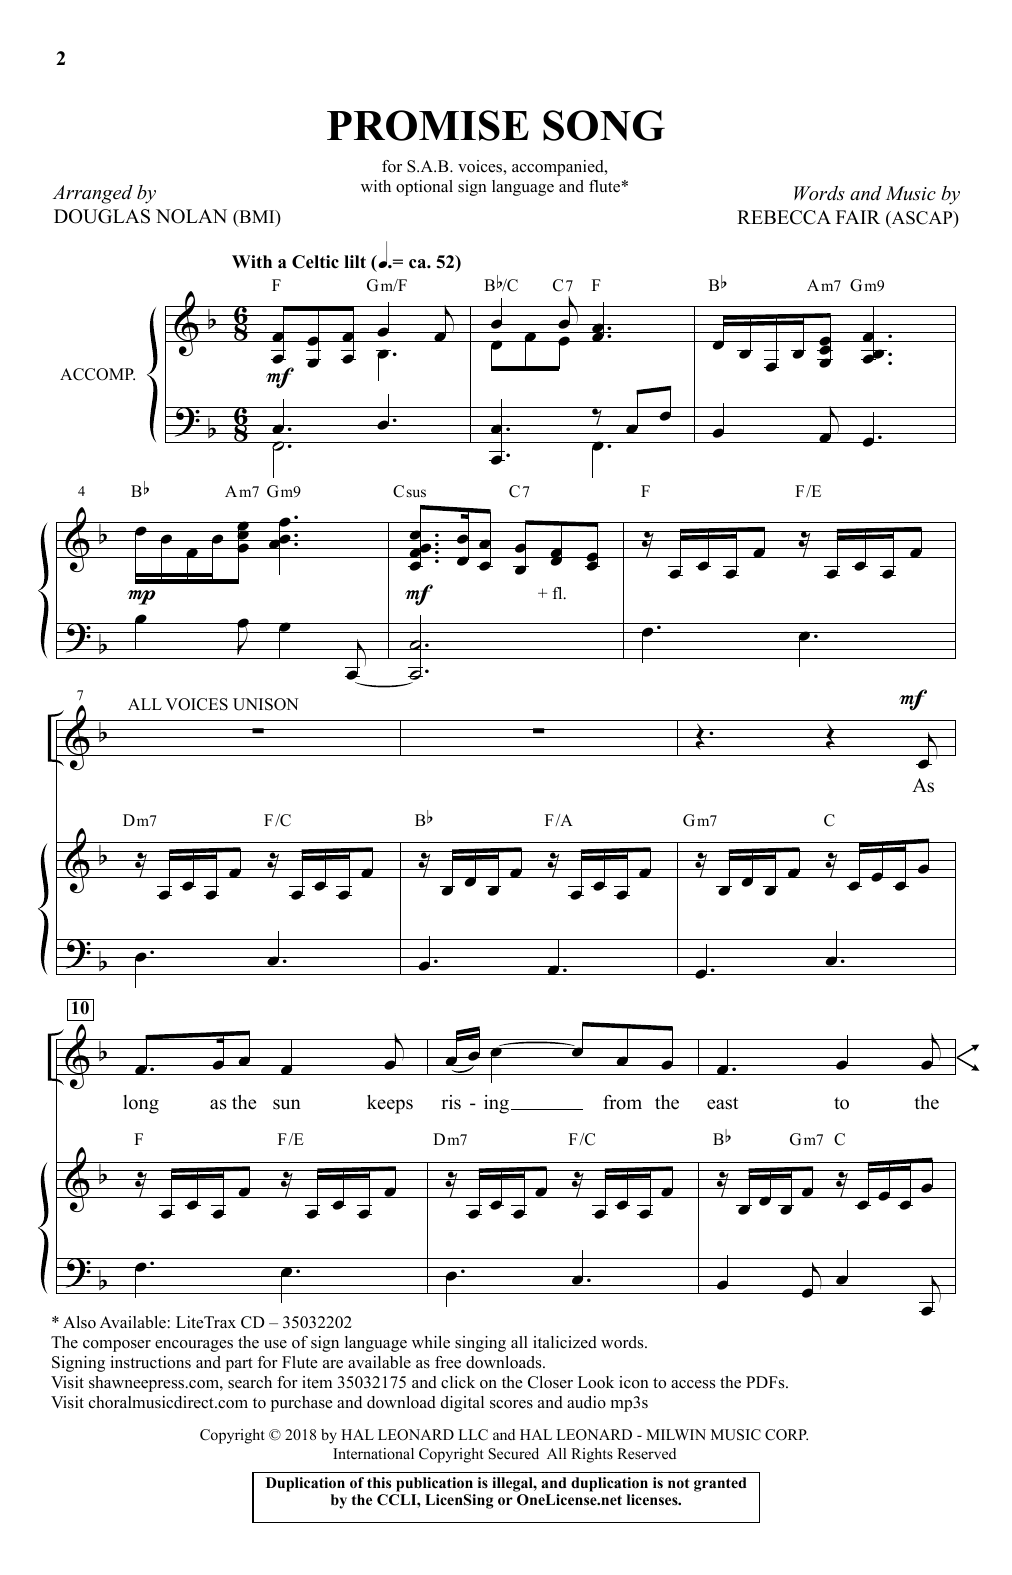 Douglas Nolan Promise Song Sheet Music Notes & Chords for SAB - Download or Print PDF